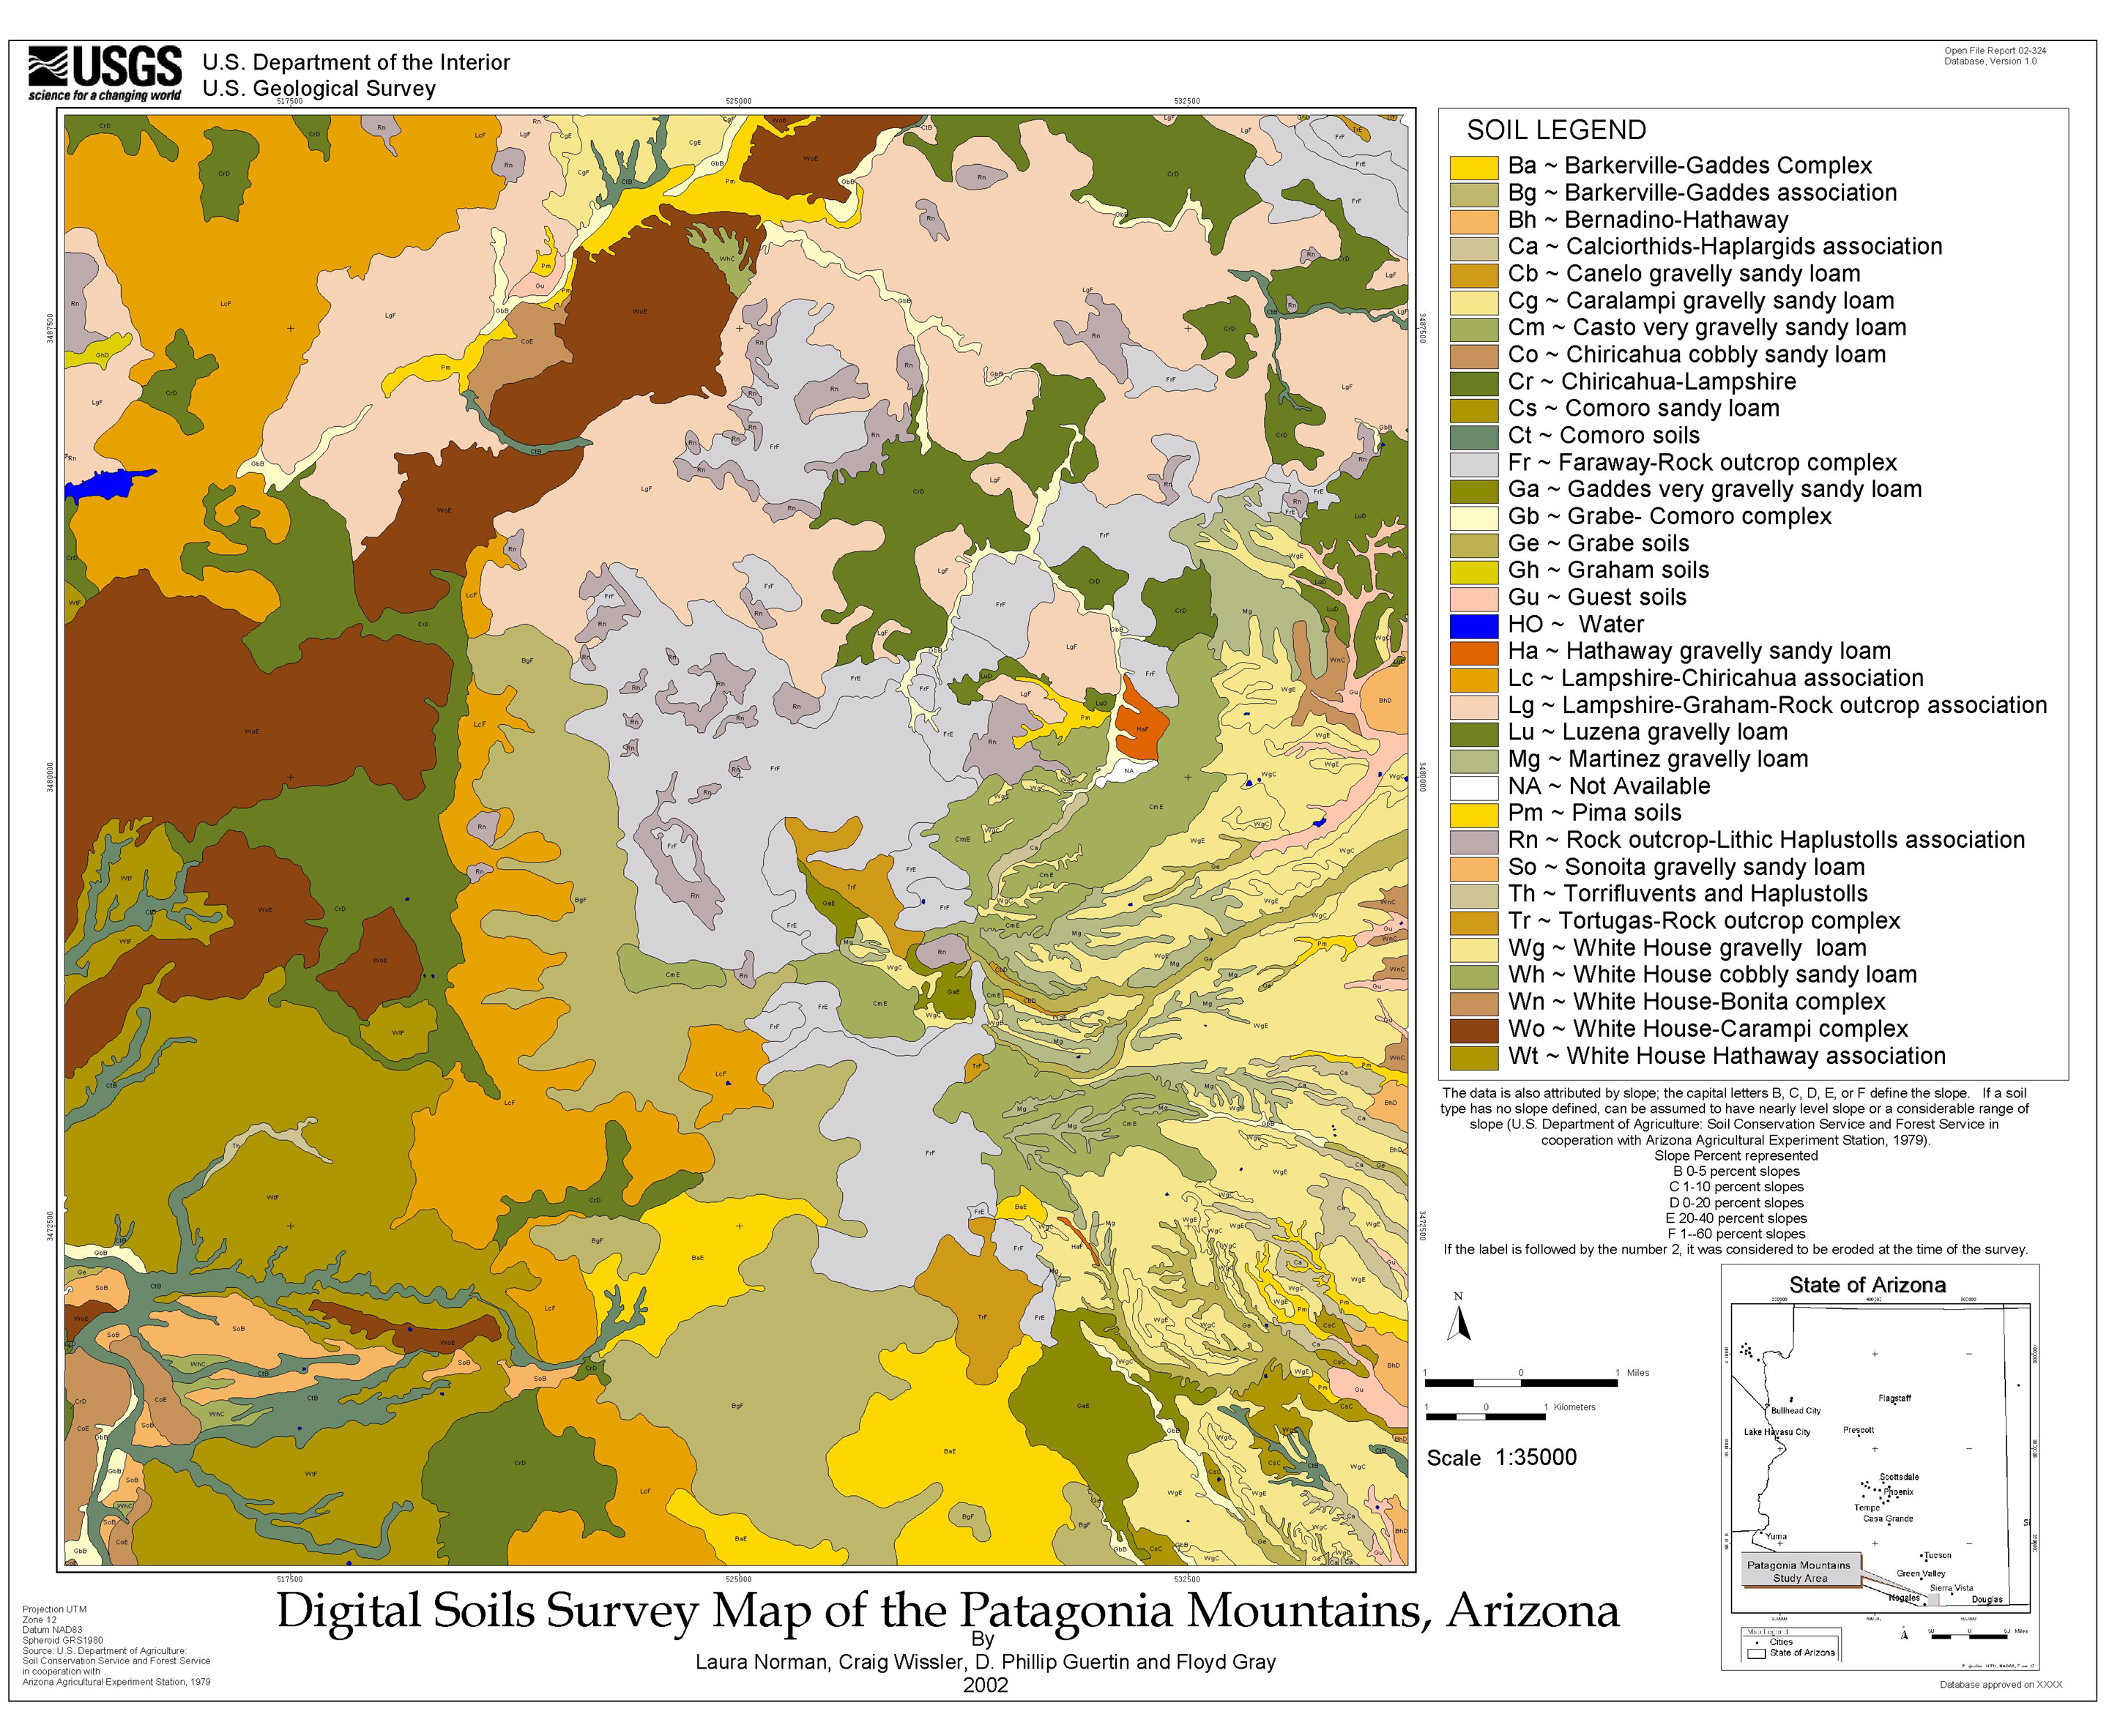 Digital soils survey map of the Patagonia Mountains